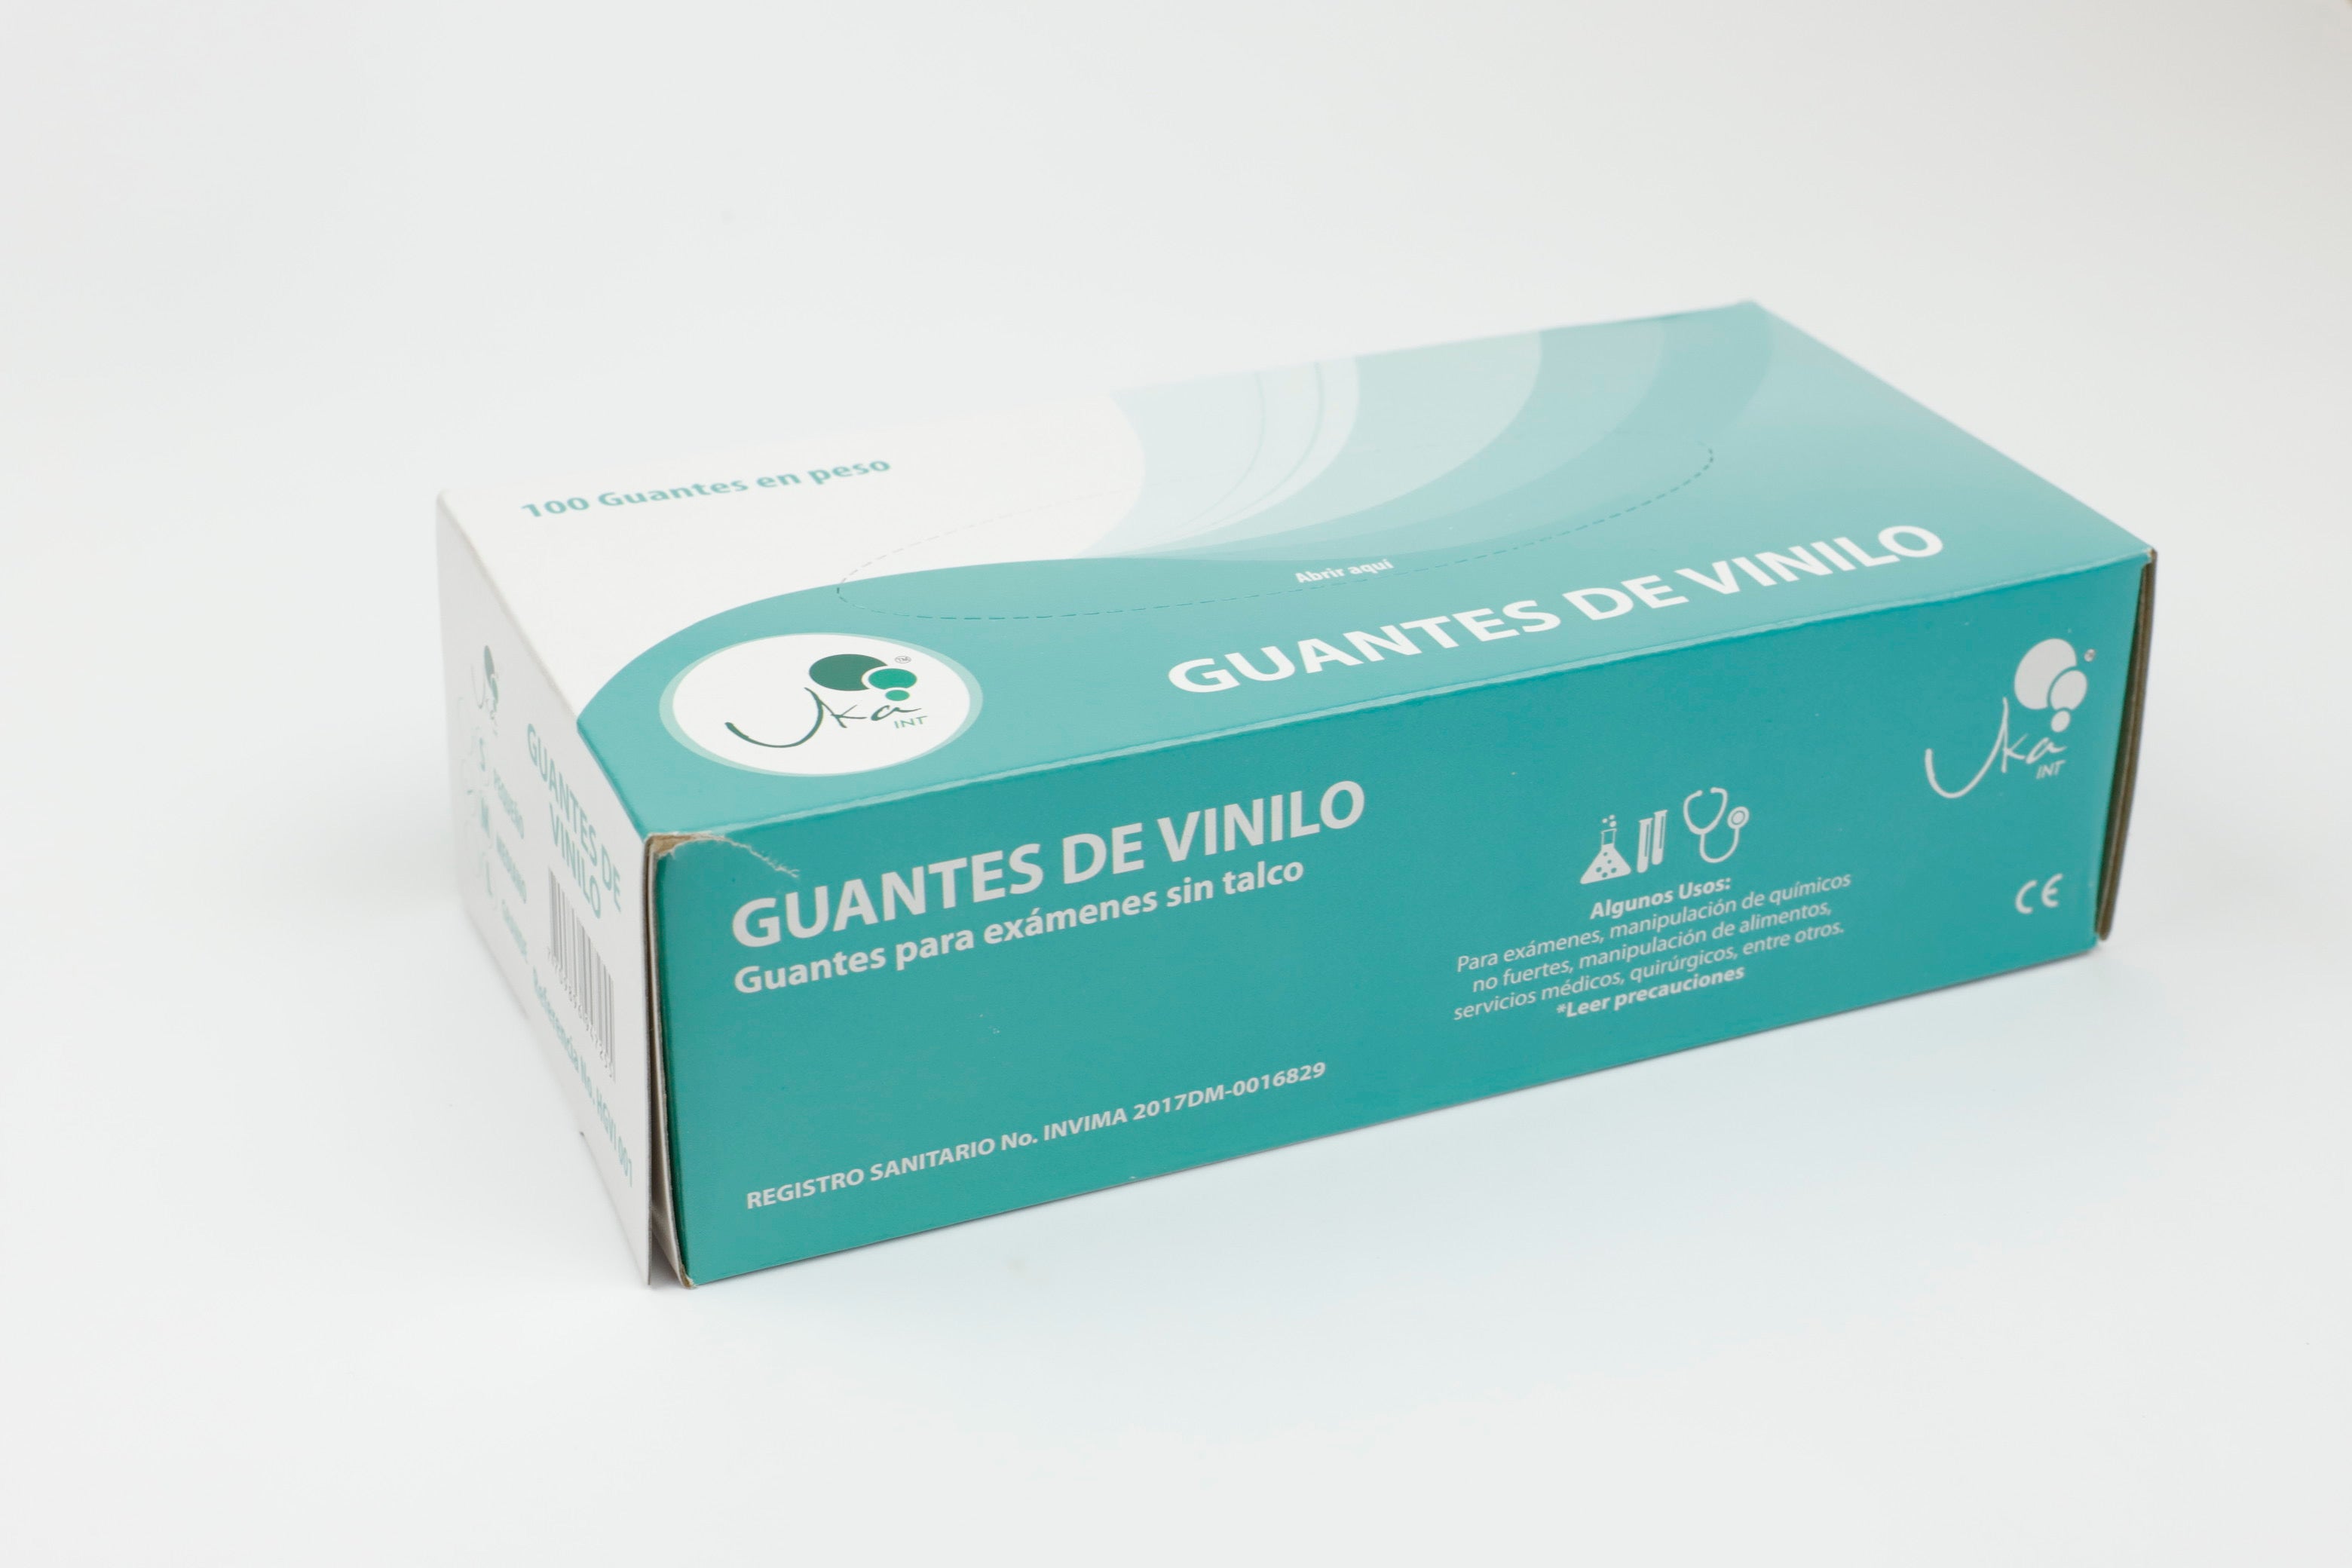 Guantes de vinilo sin talco - Caja x 100 unidades - Pedido 10 cajas - Jelt